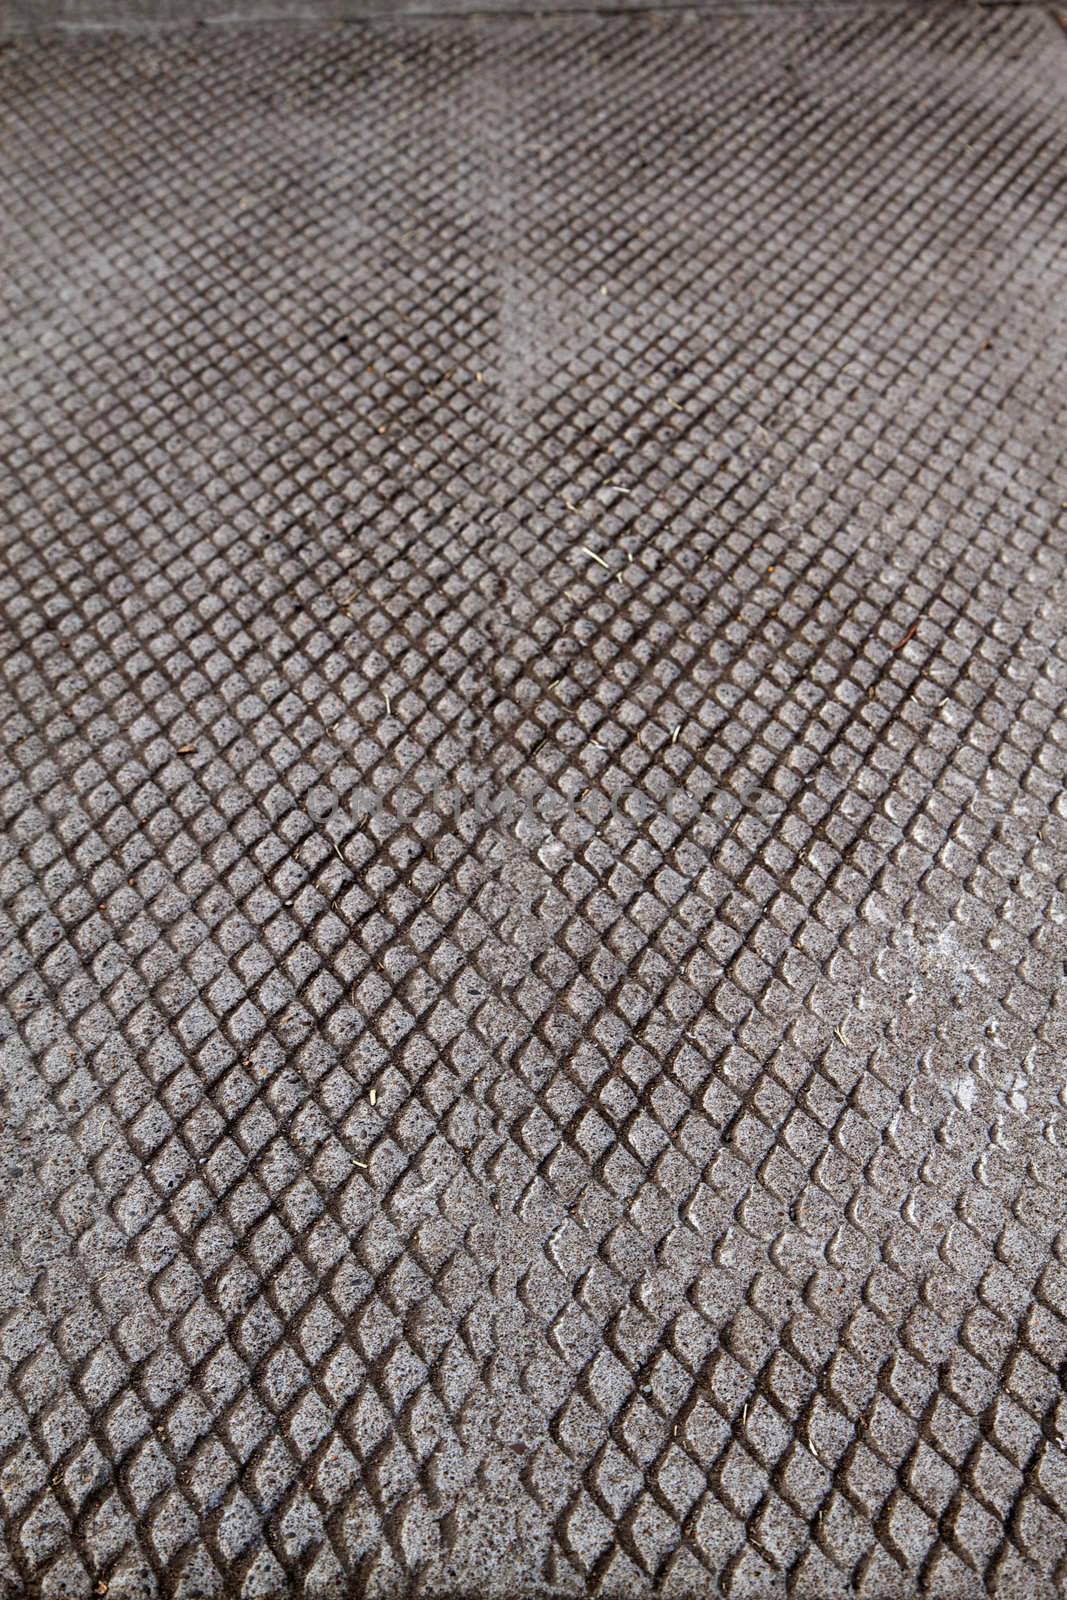 Diamond pattern Serrated concrete on a sidewalk